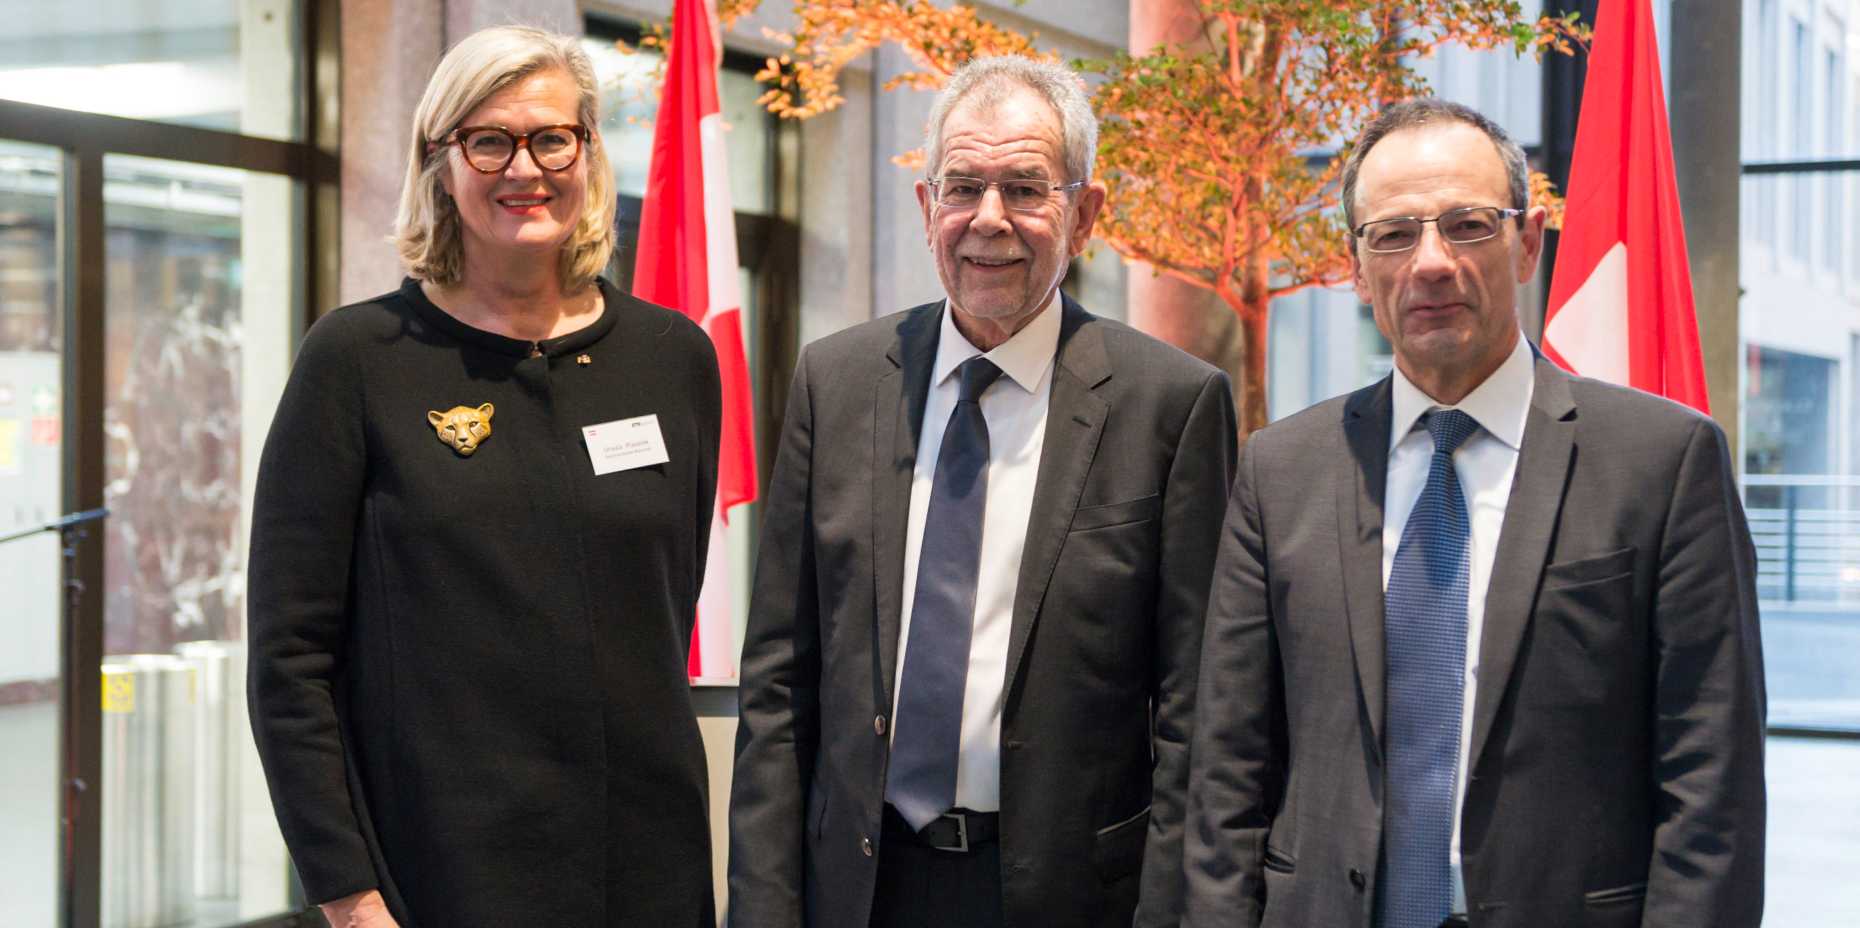 The Austrian ambassador Ursula Plassnik, the Austrian President Alexander Van der Bellen and ETH President Lino Guzzella (v.l.n.r) (all images: ETH Zurich / Oliver Bartenschlager)